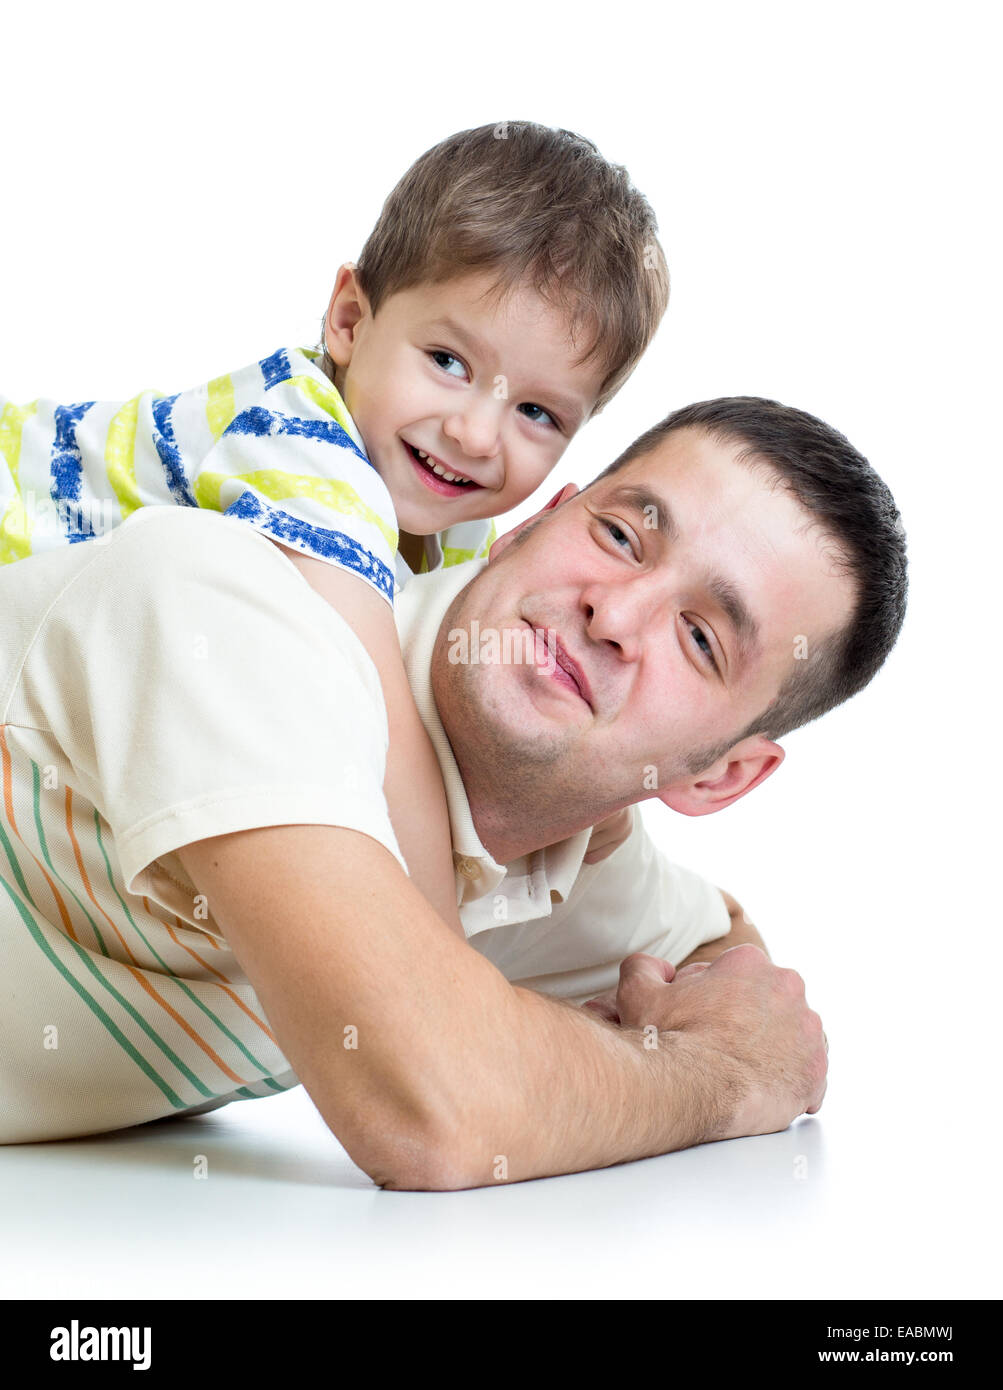 kid boy embracing dad Stock Photo